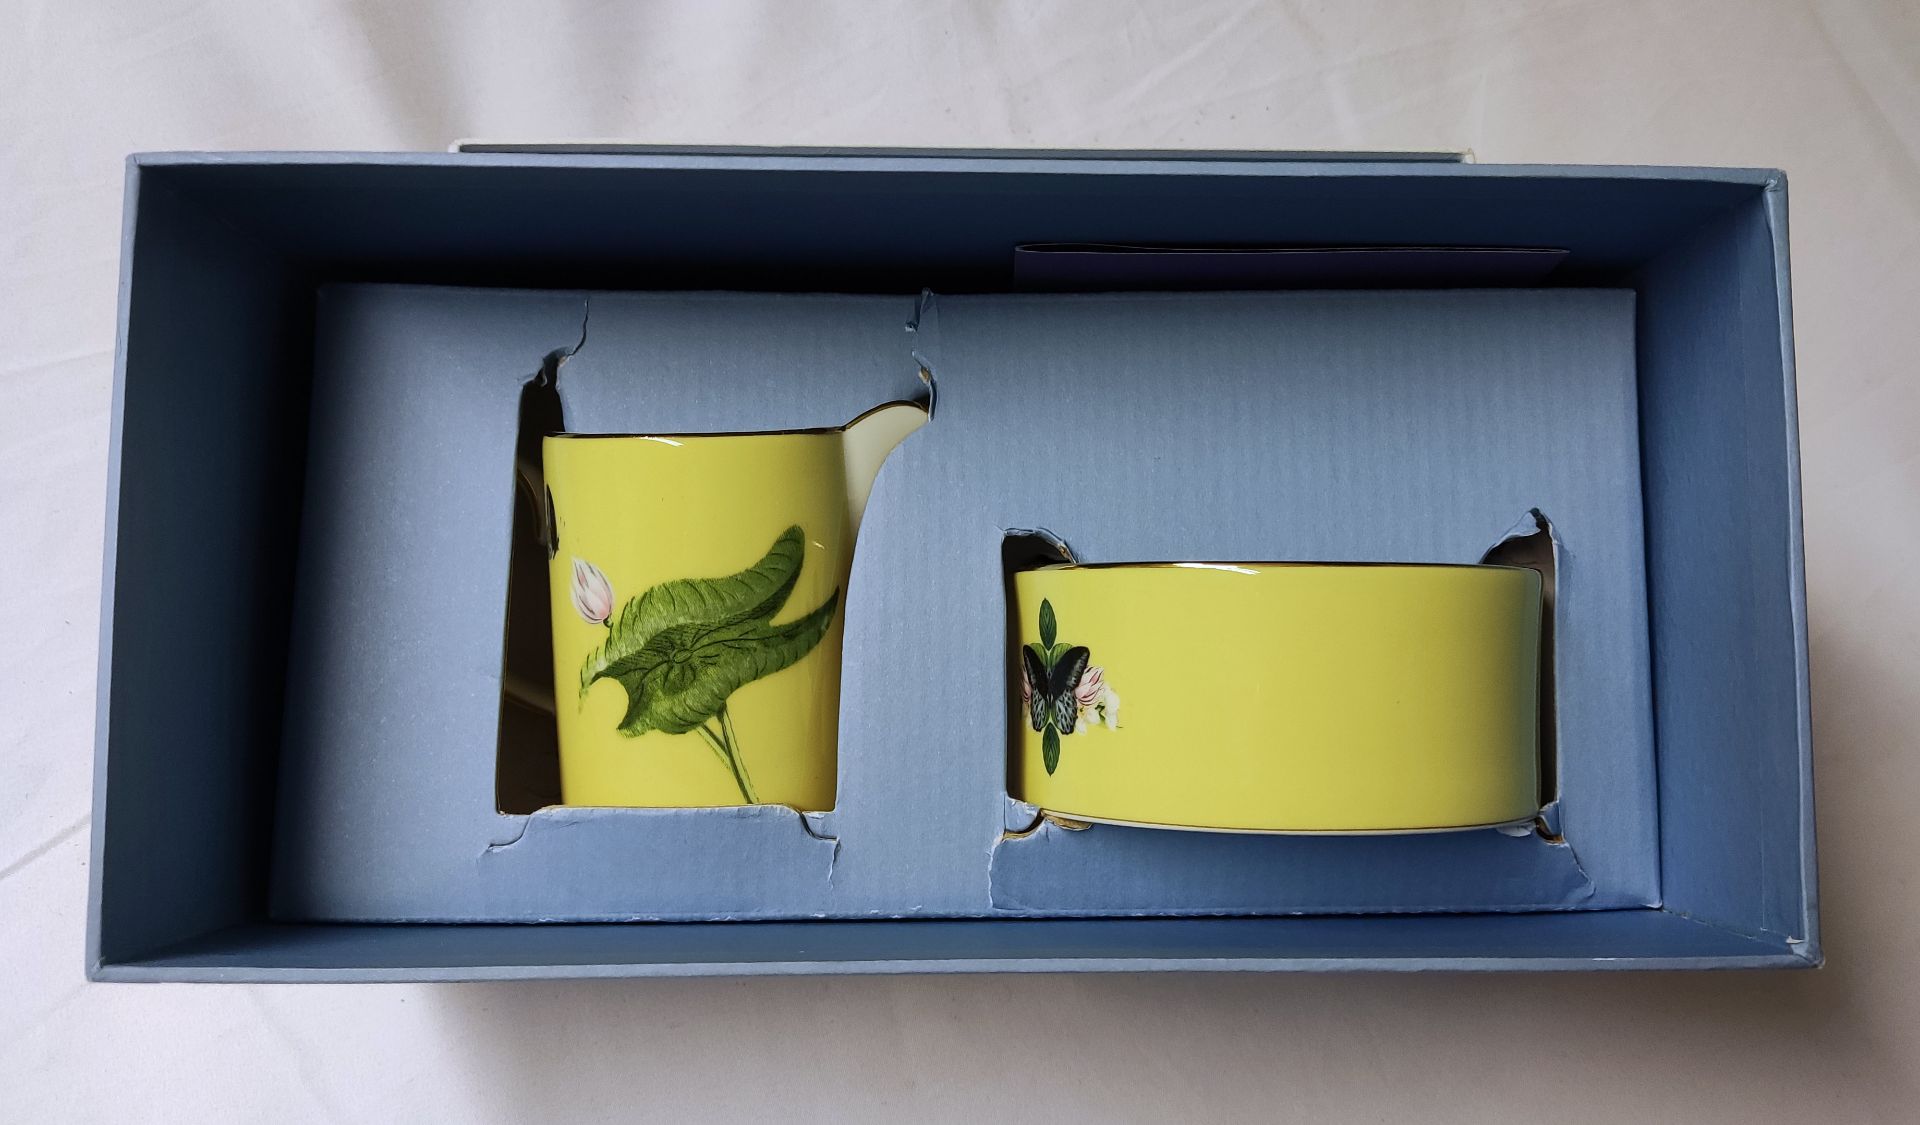 1 x WEDGWOOD Wonderlust Waterlily Fine Bone China Sugar & Creamer Set - New/Boxed - RRP £80 - - Image 16 of 22